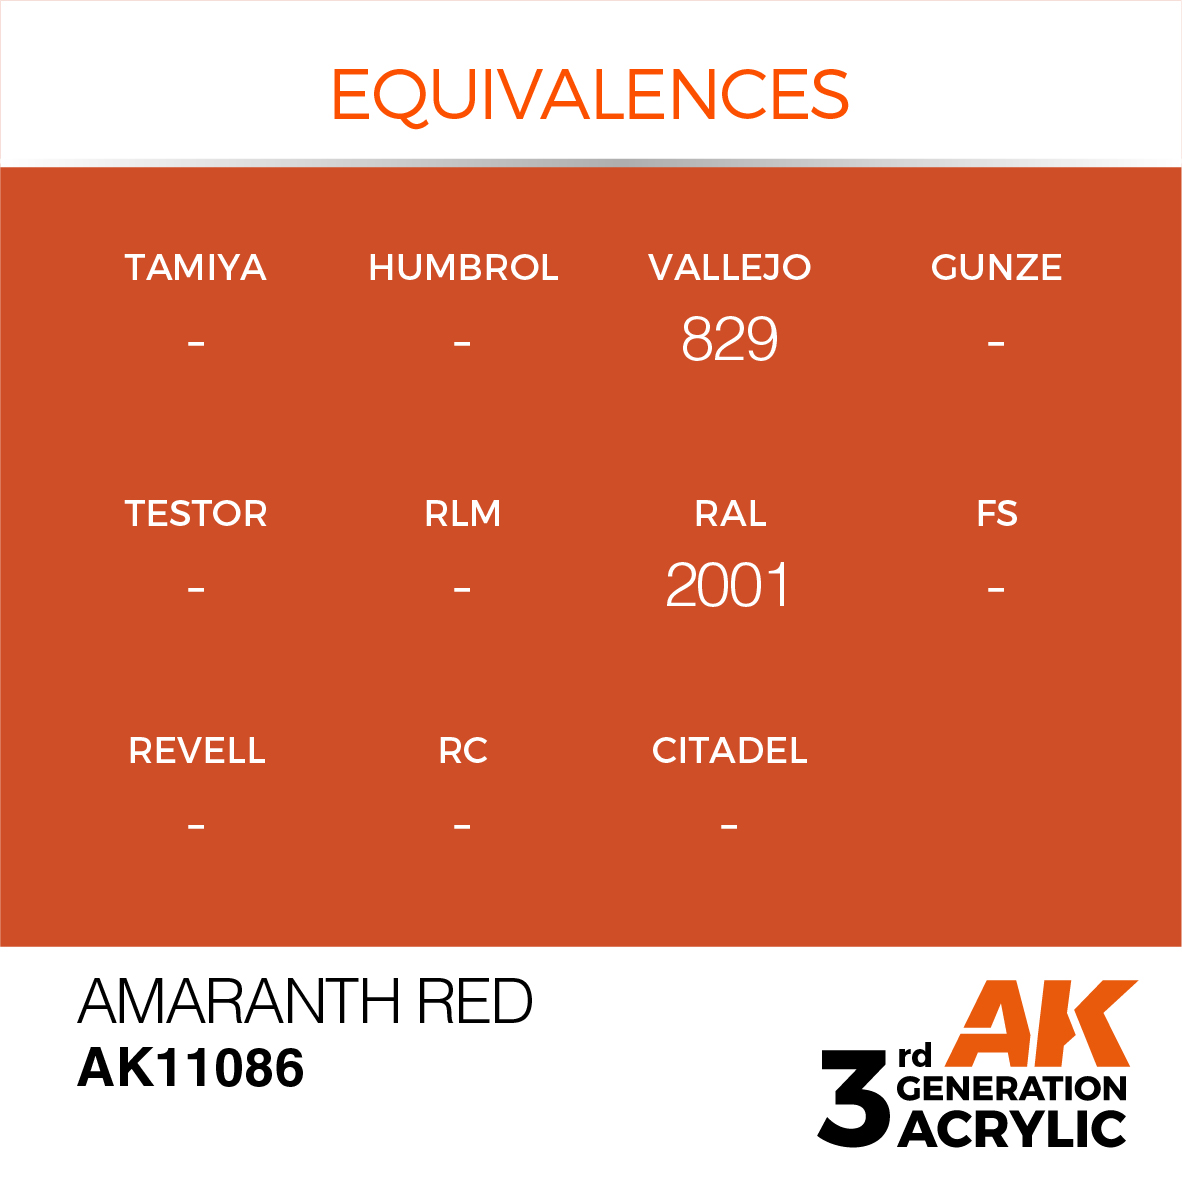 AK11086 Amaranth Red (3rd-Generation) (17mL)